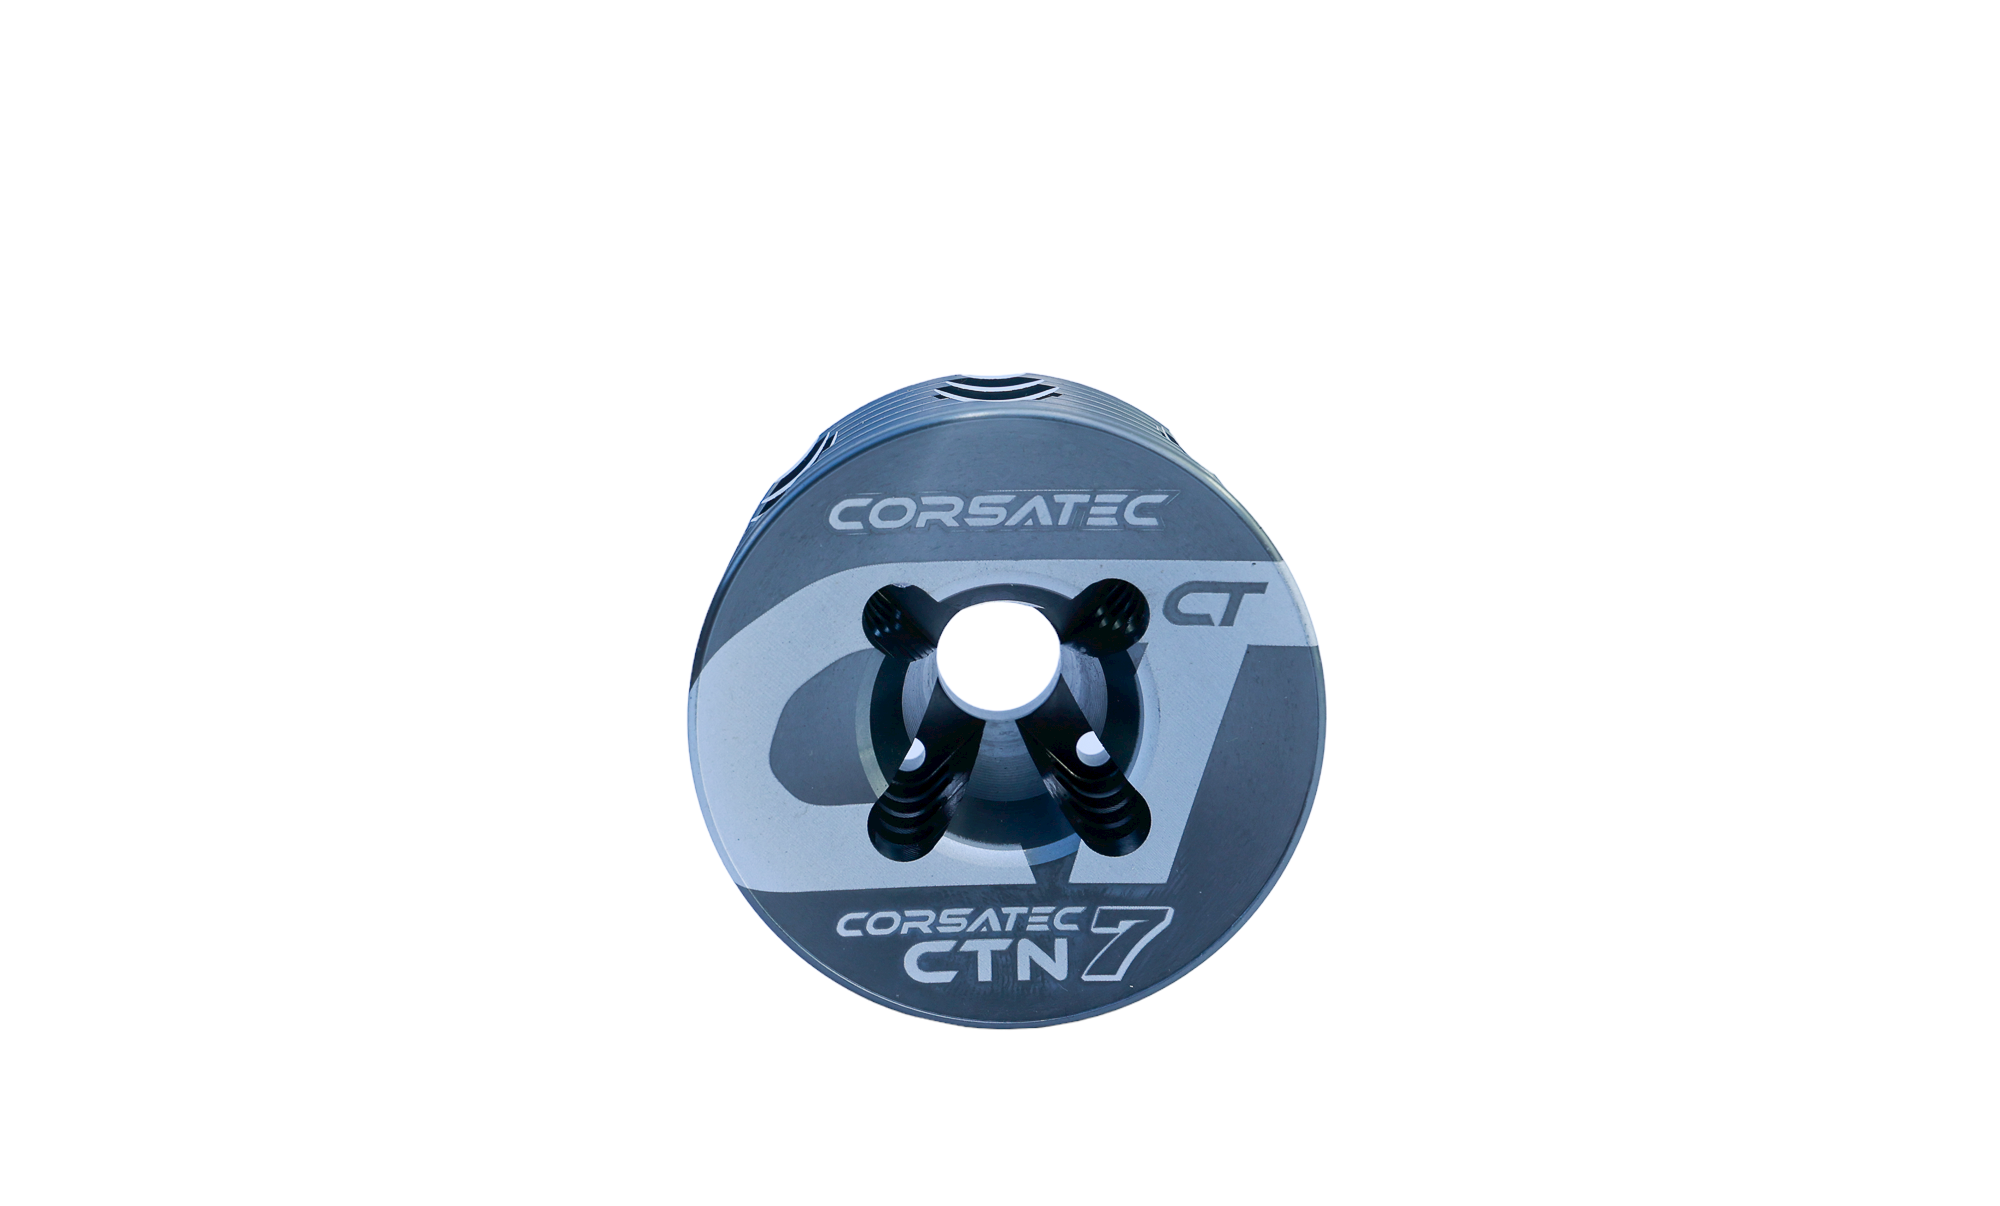 Corsatec C1 Cooling Head pro